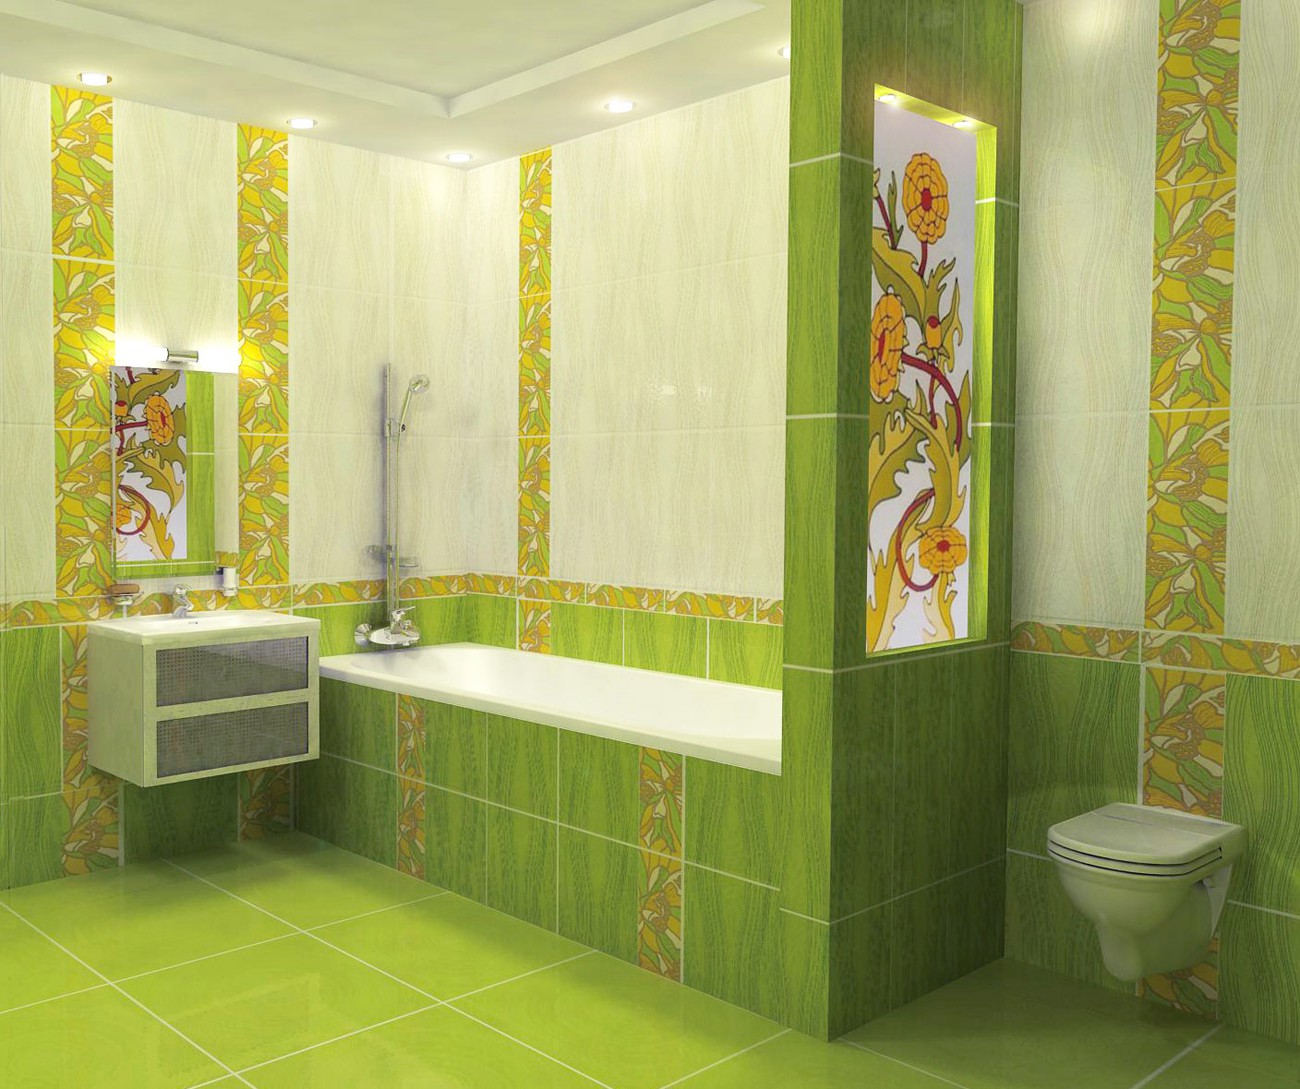 Ванная комната в зеленом цвете 